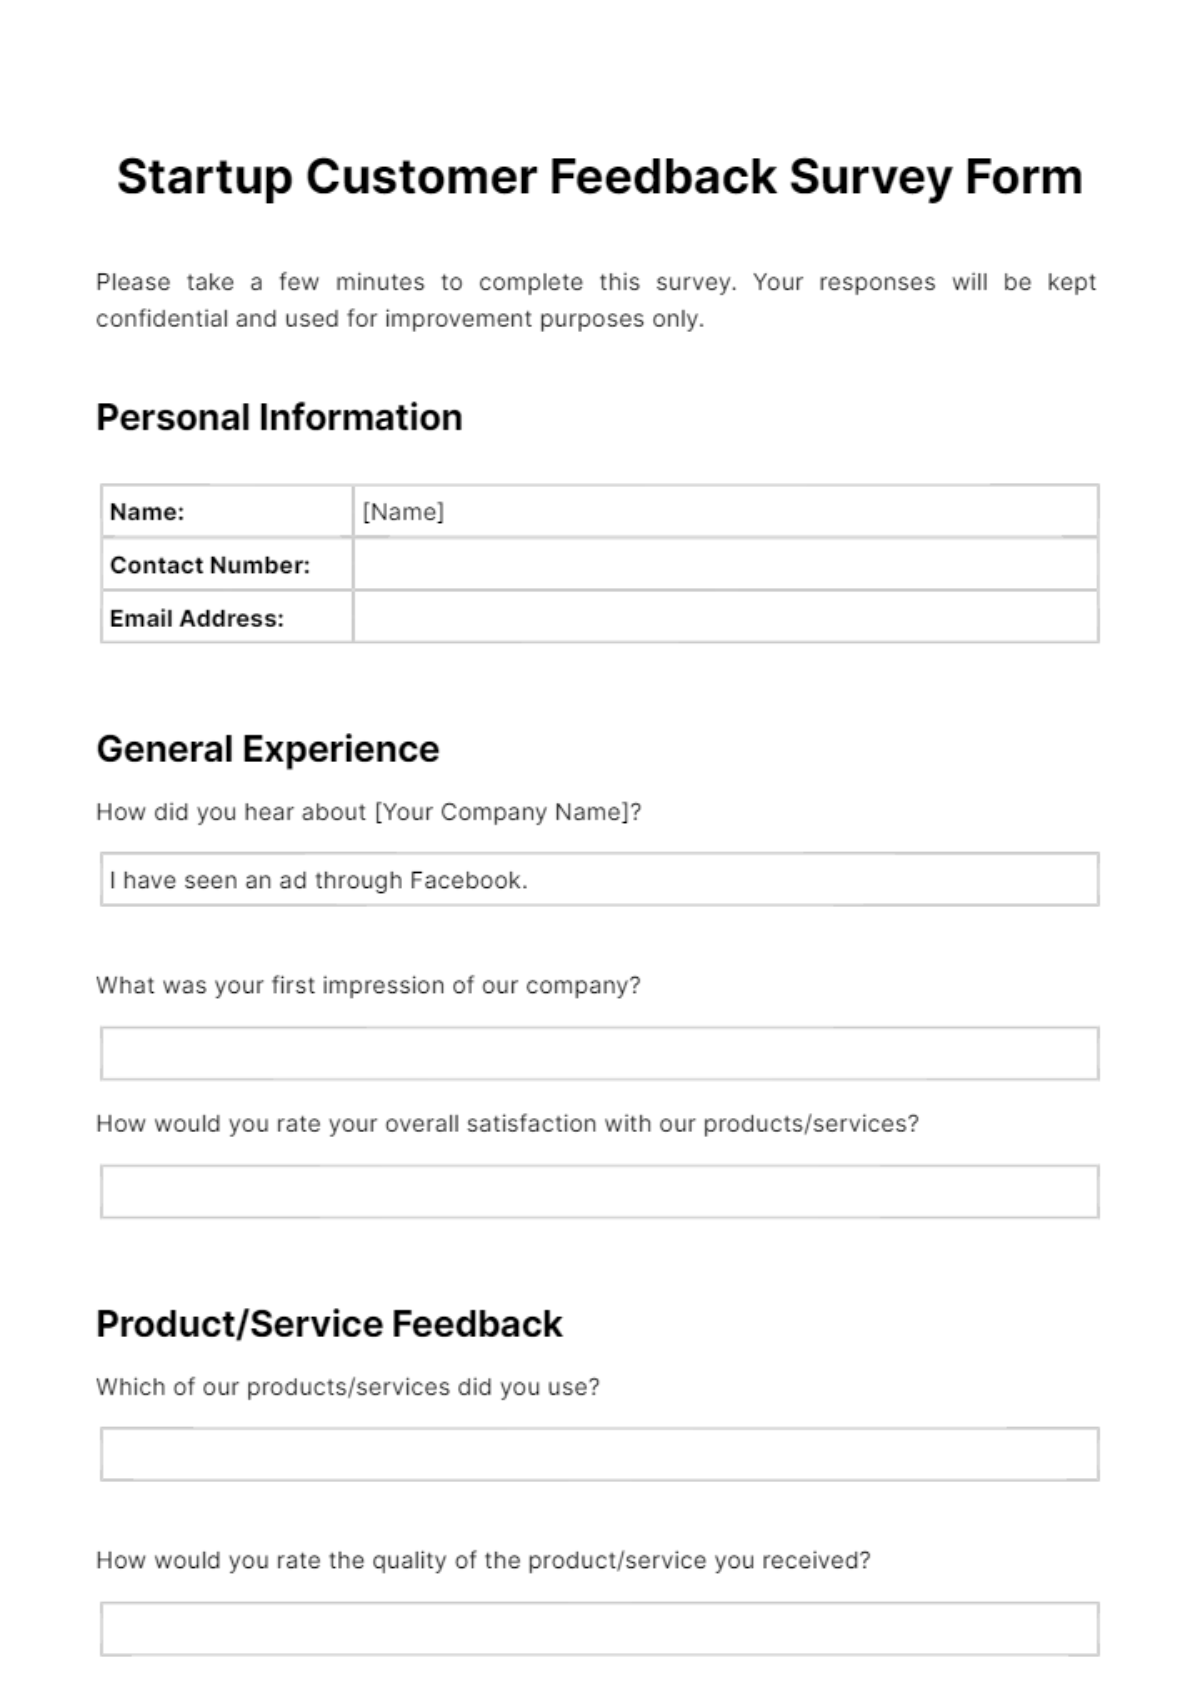 Free Startup Customer Feedback Survey Form Template